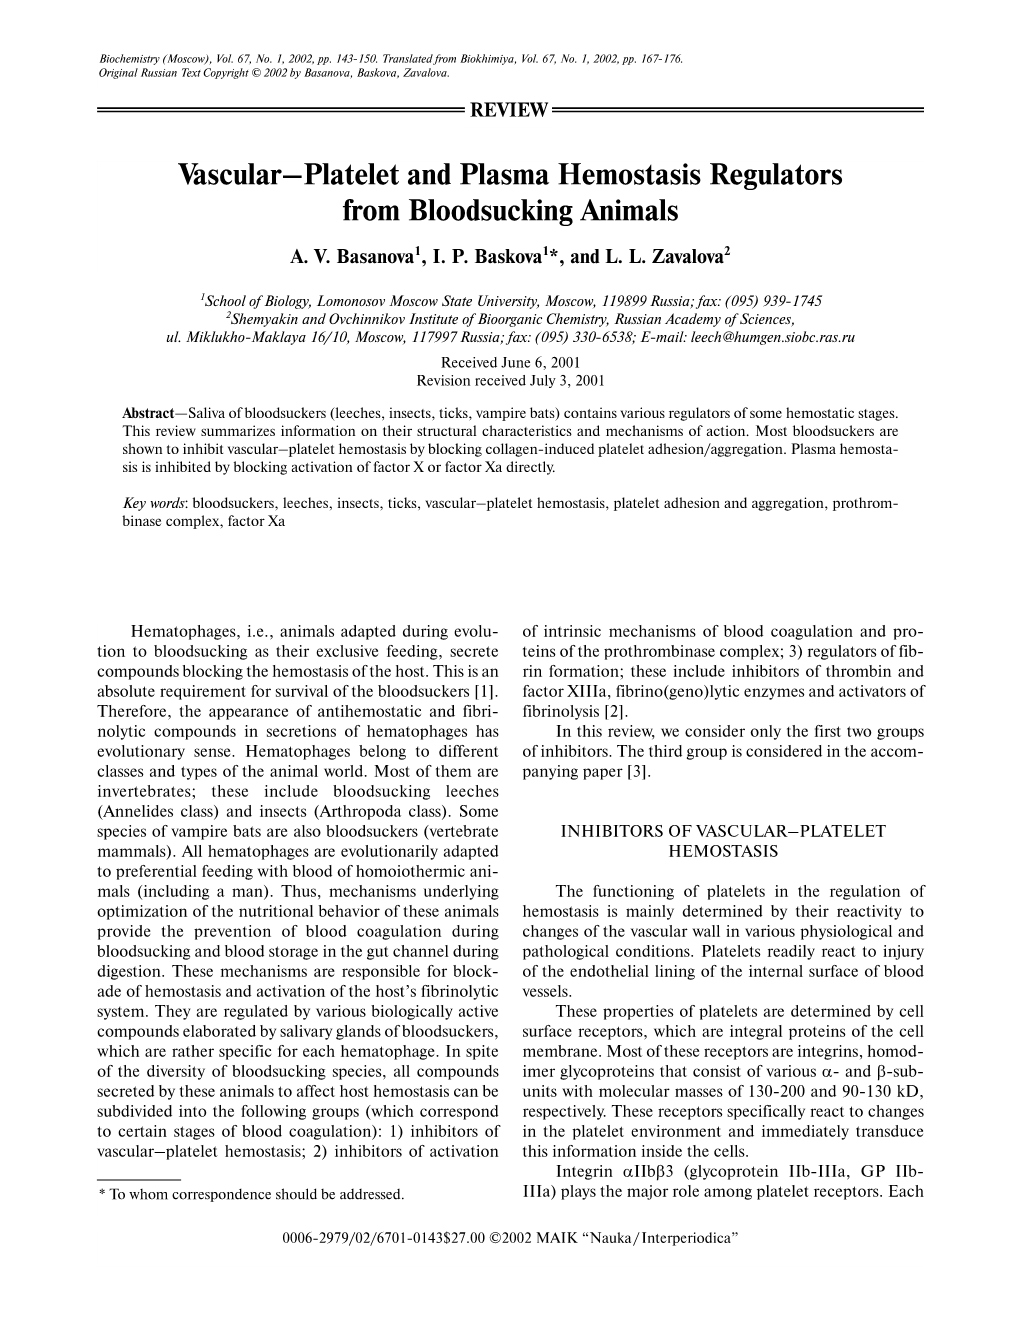 Vascular–Platelet and Plasma Hemostasis Regulators from Bloodsucking Animals